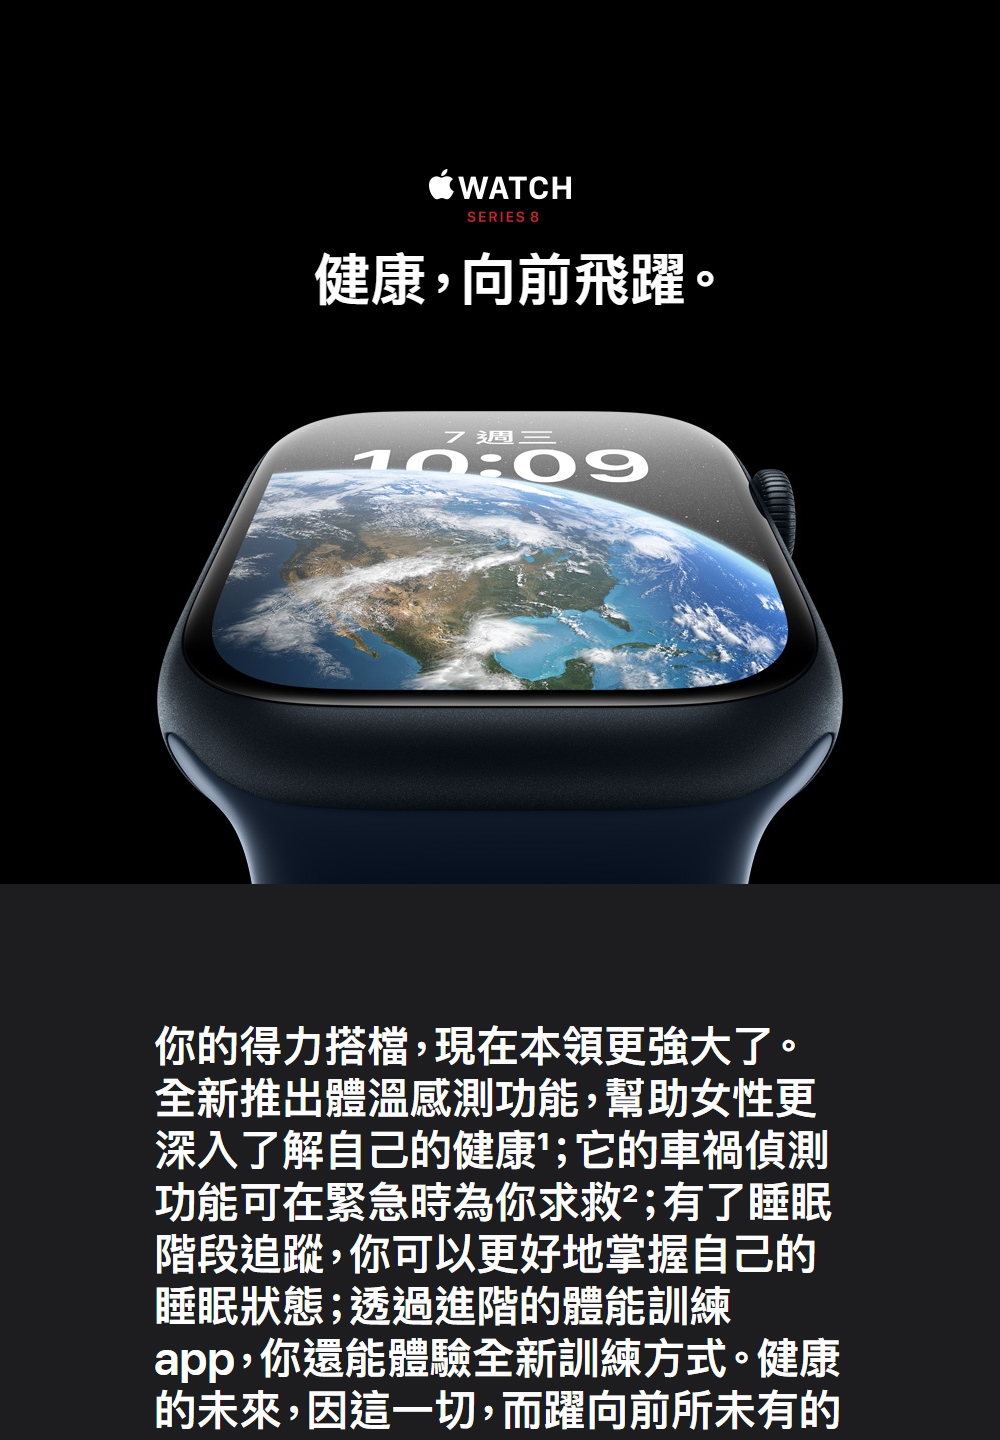 Apple 蘋果 B 級福利品 Apple Watch S8